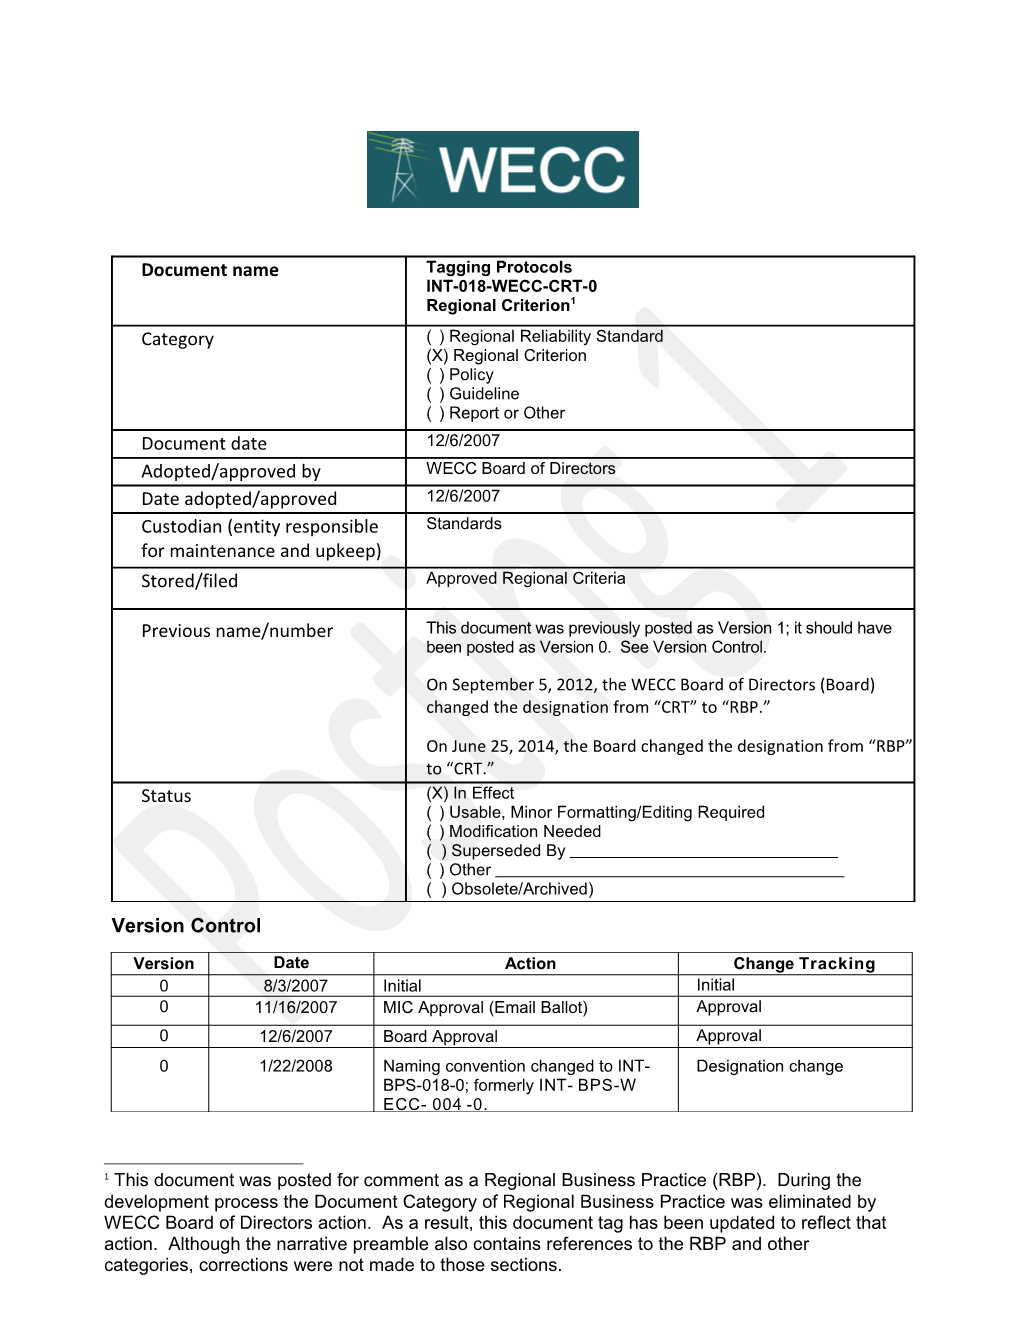 WECC-0106 INT-018-WECC-RBP-1 Product Codes - Posting 1 - Clean 2-13-2014